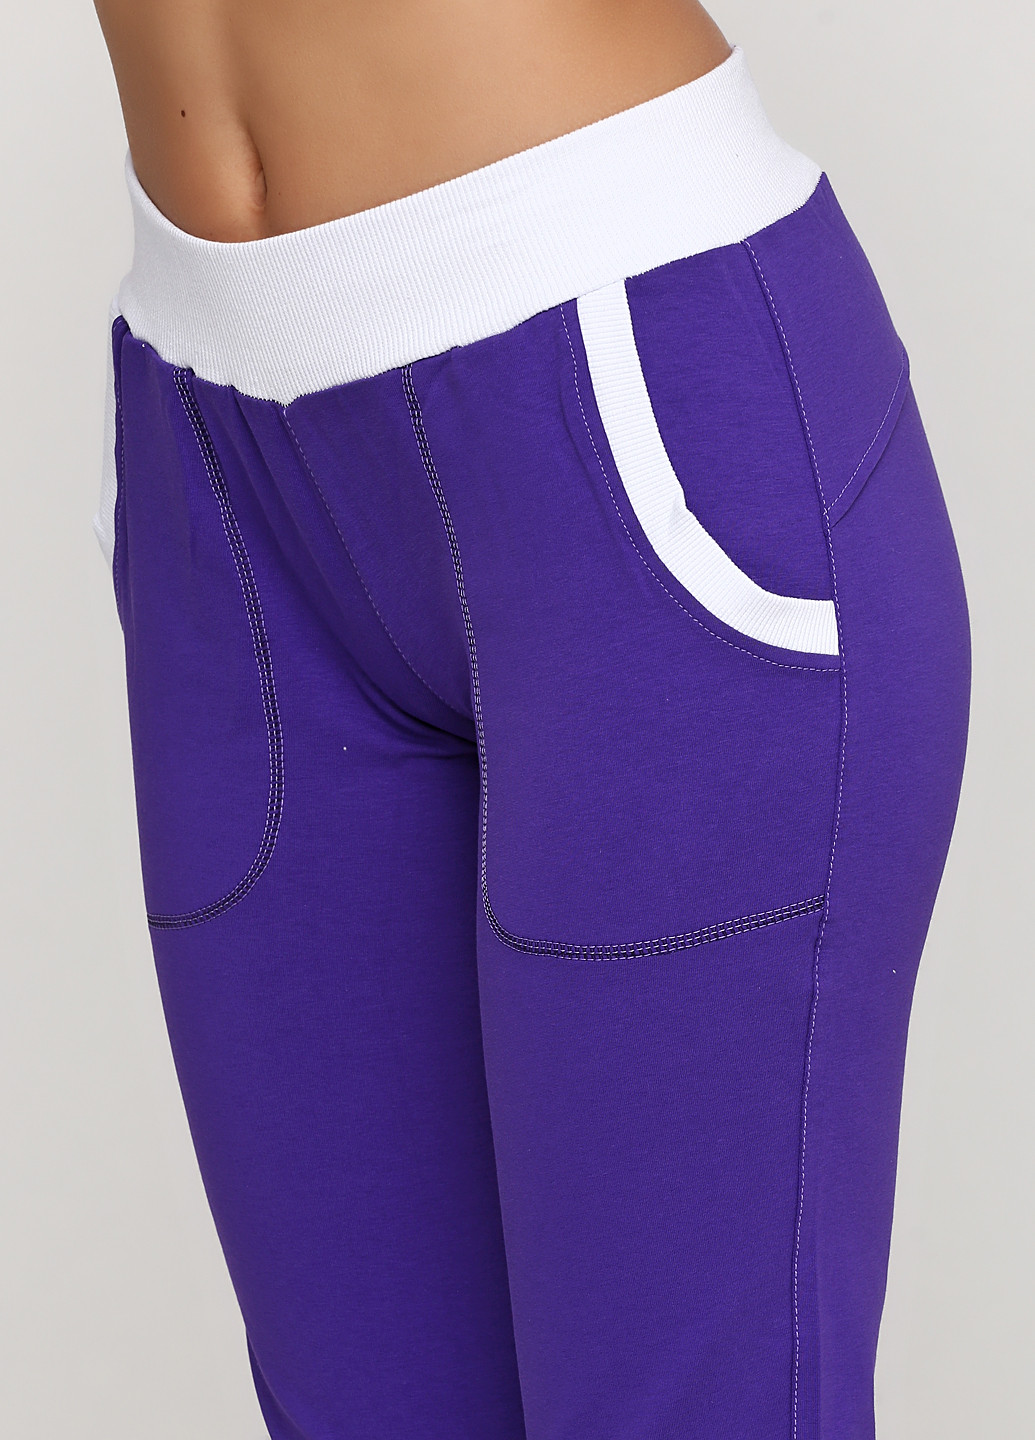 Костюм (футболка, брюки) Radda брючный фиолетовый кэжуал